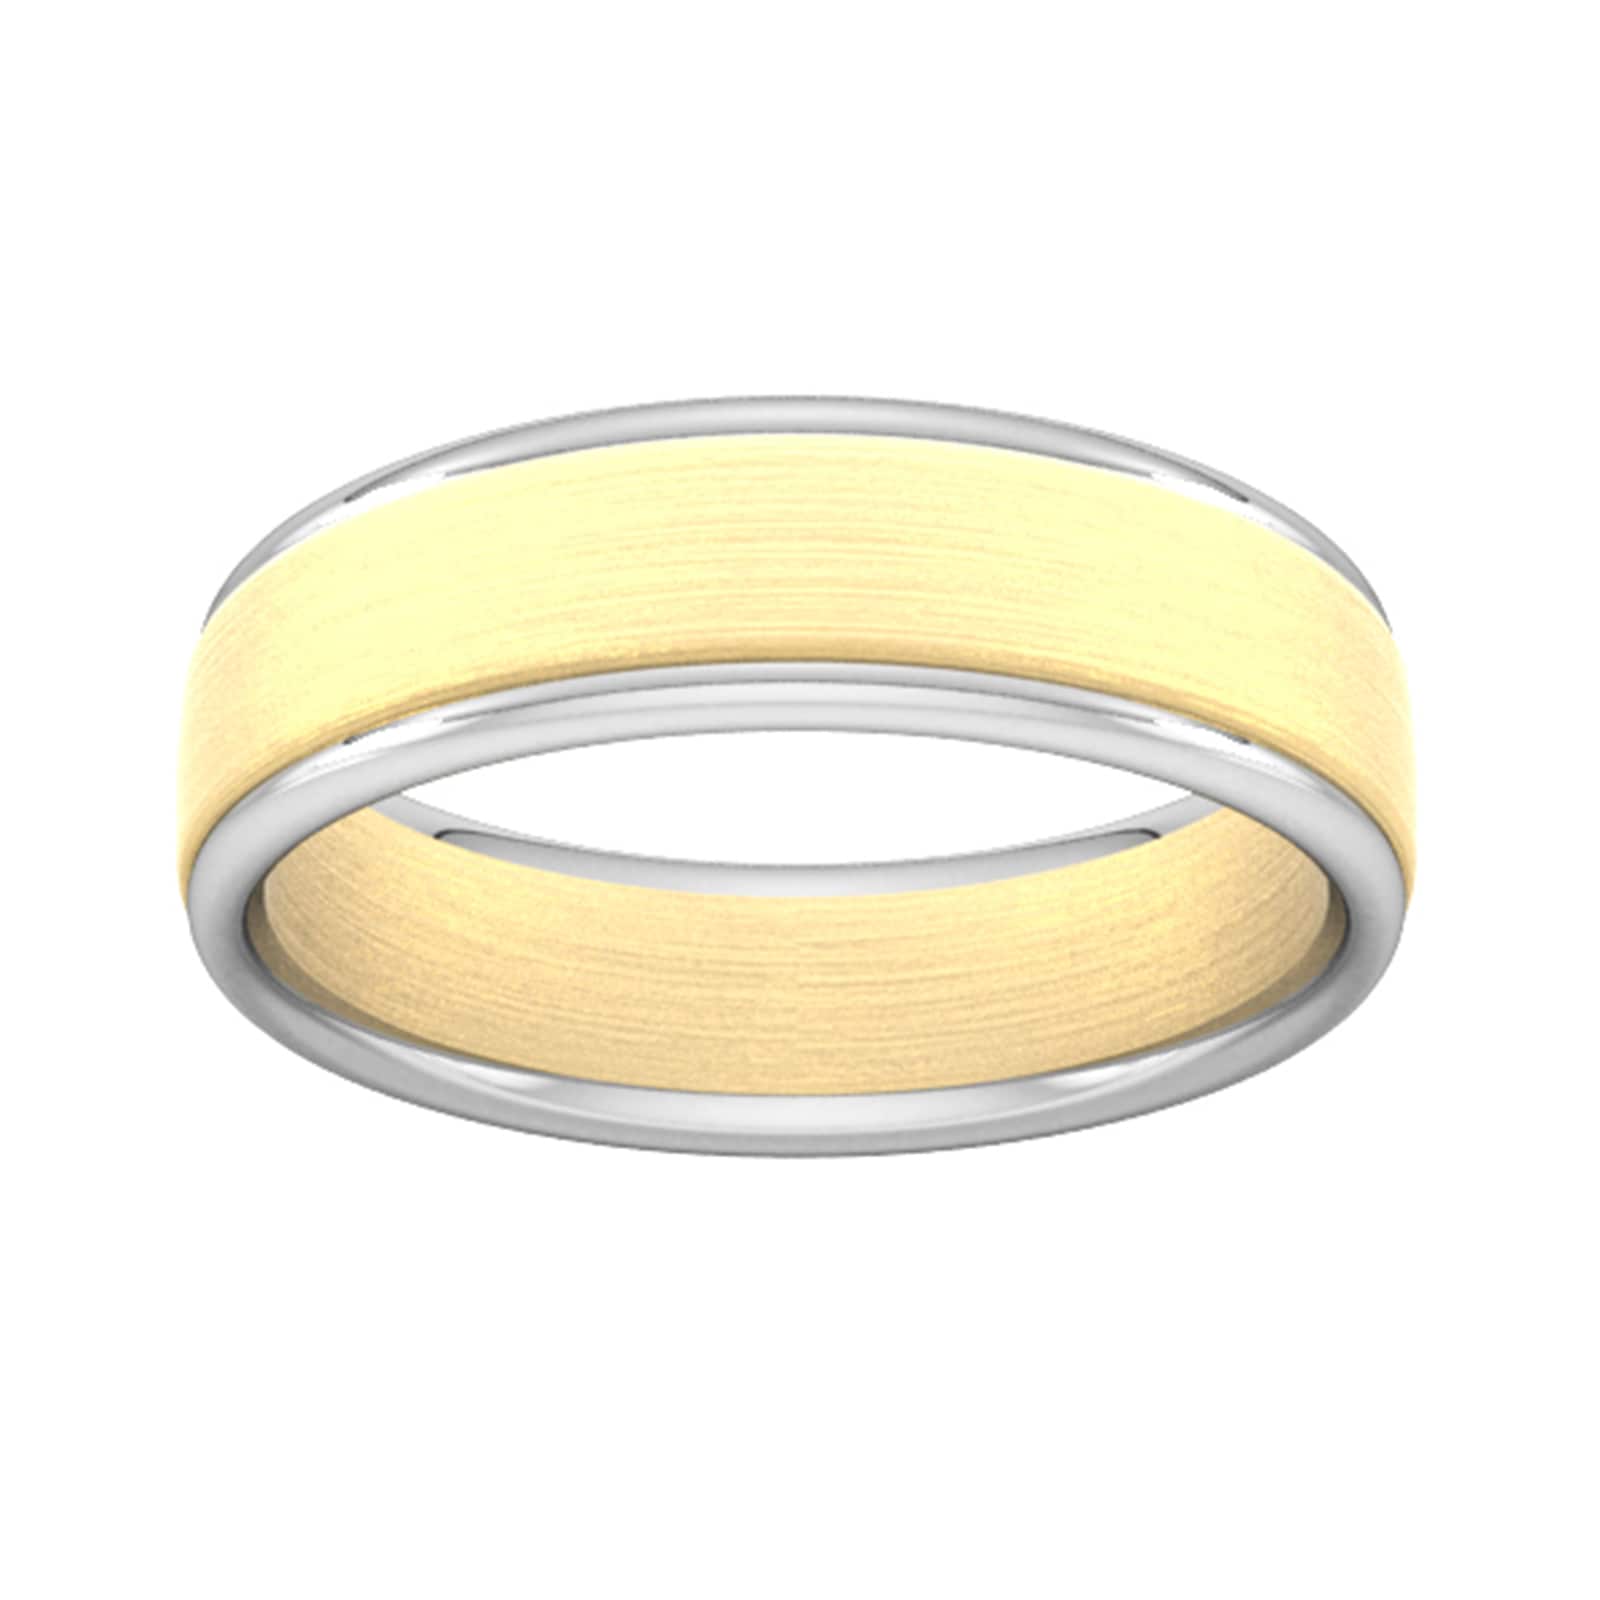 6mm Wedding Ring In 18 Carat Yellow & White Gold - Ring Size L